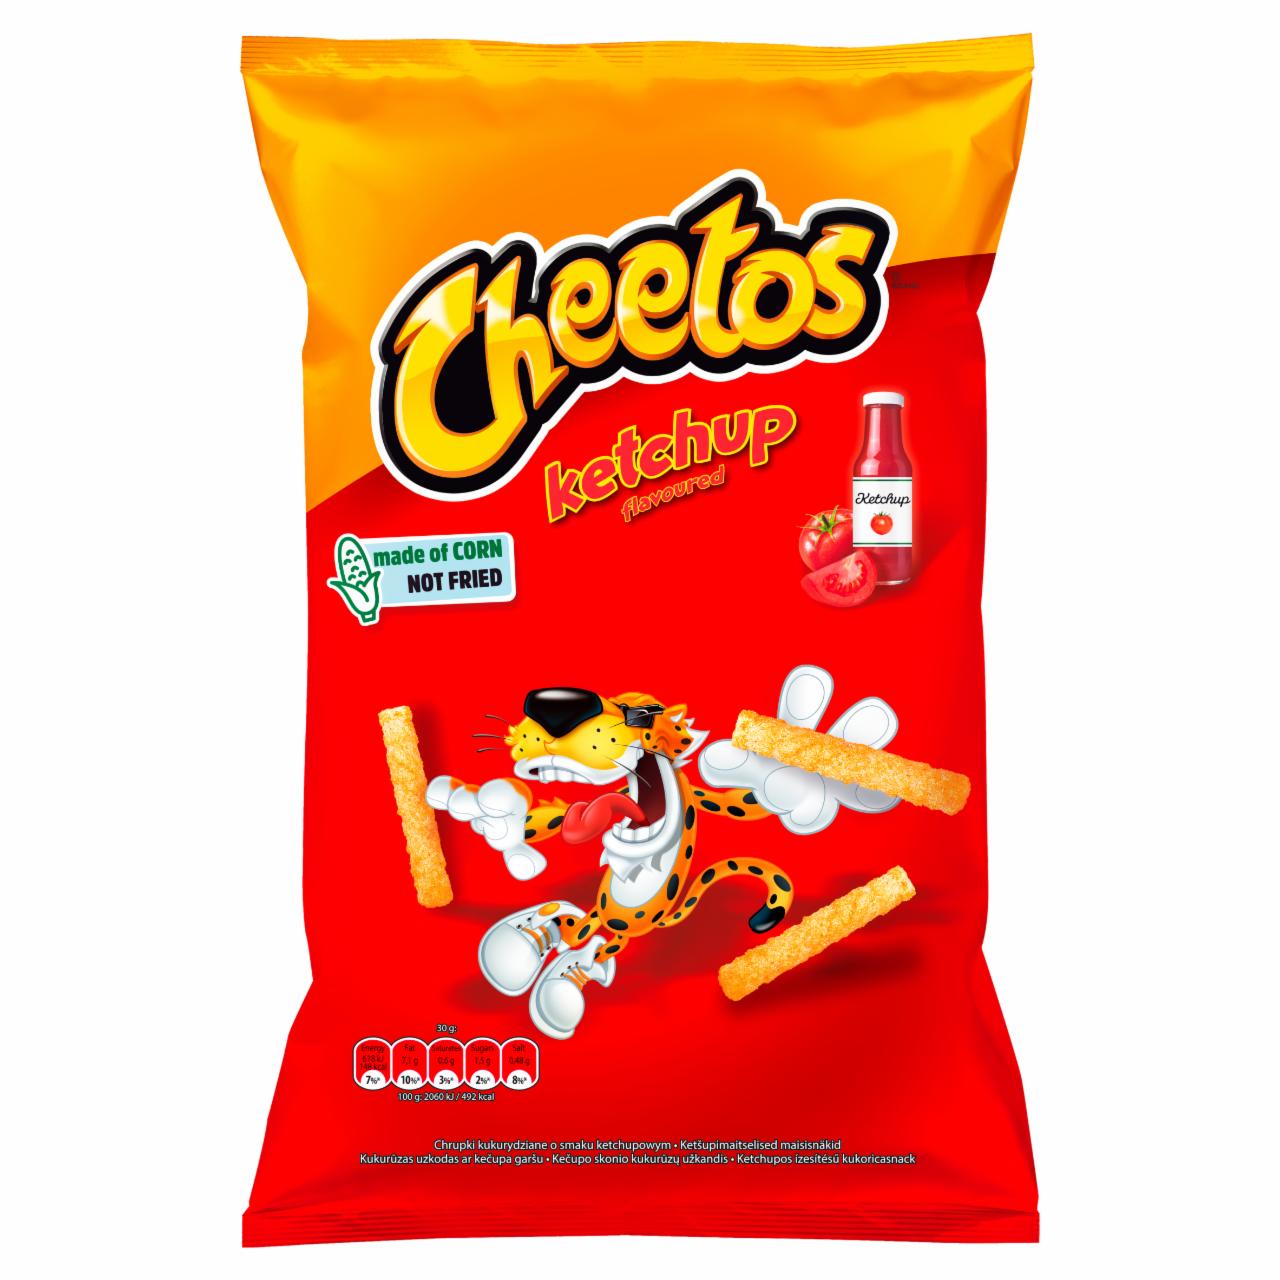 Zdjęcia - Cheetos Chrupki kukurydziane o smaku ketchupowym 85 g